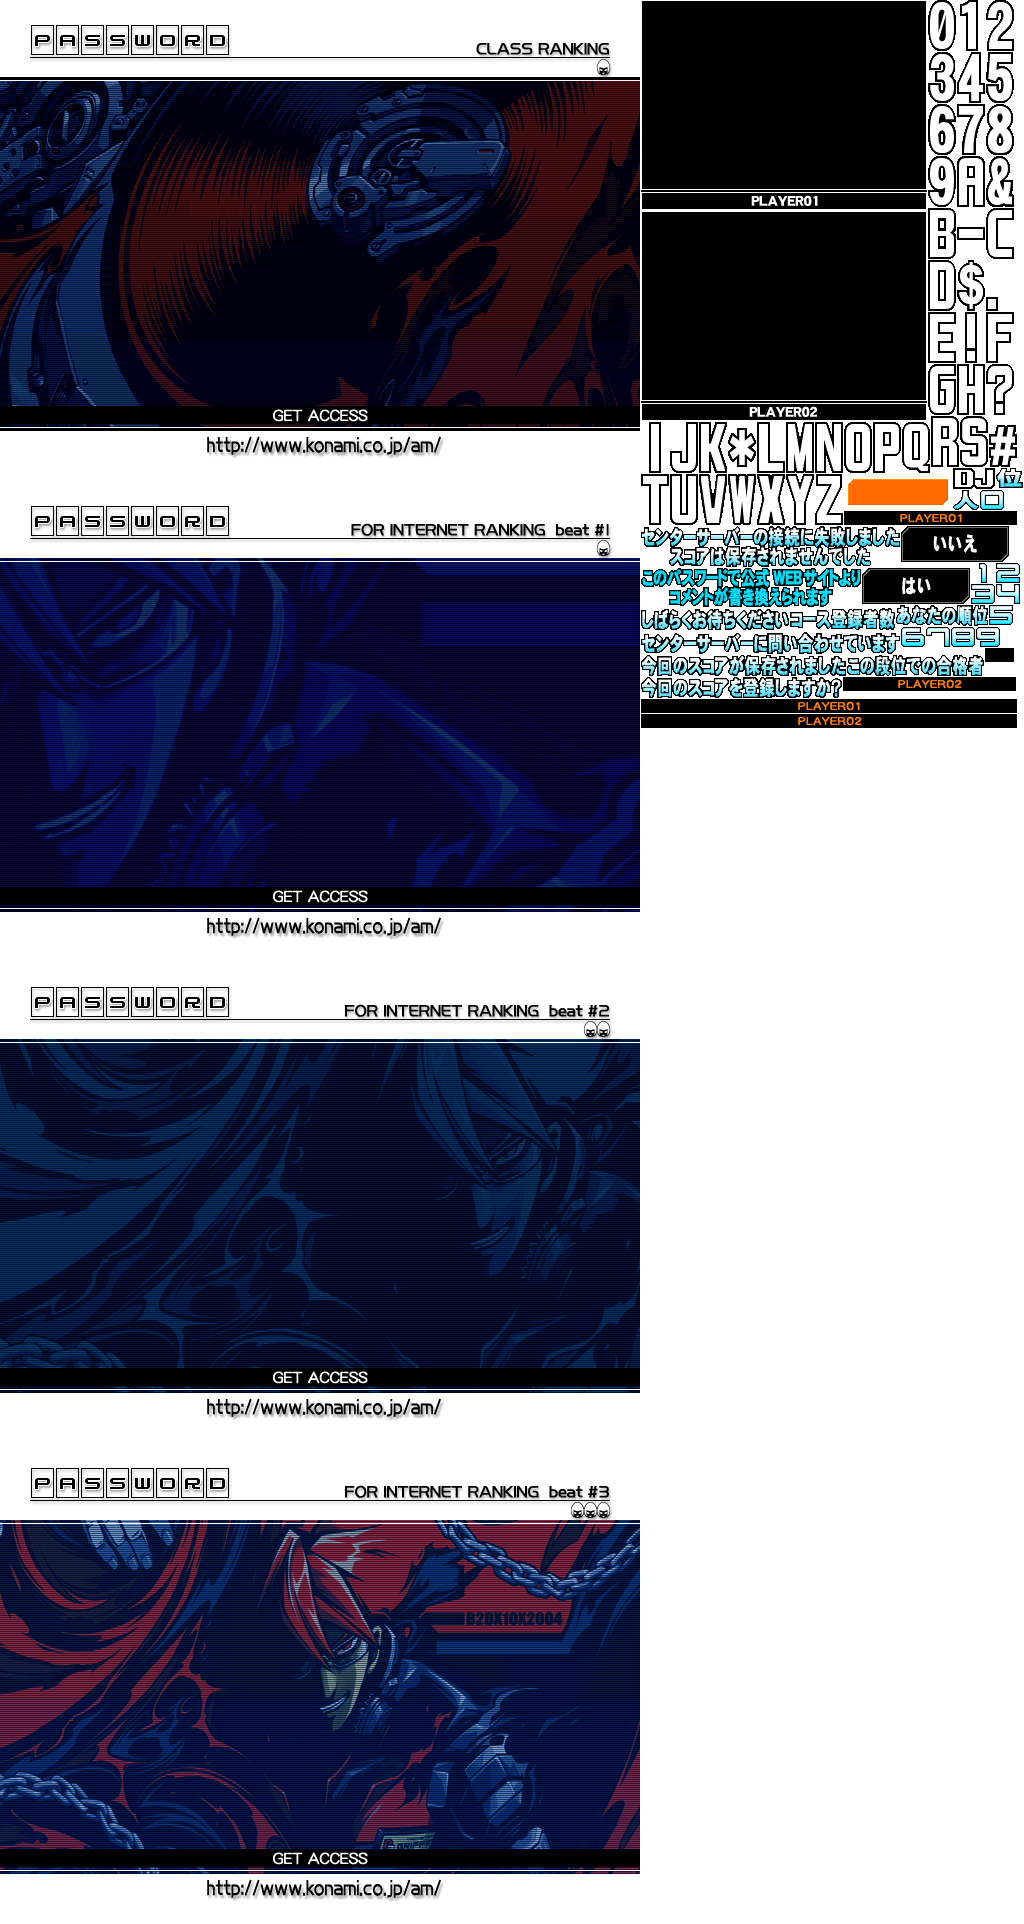 beatmania IIDX Series - Password (Internet Ranking)